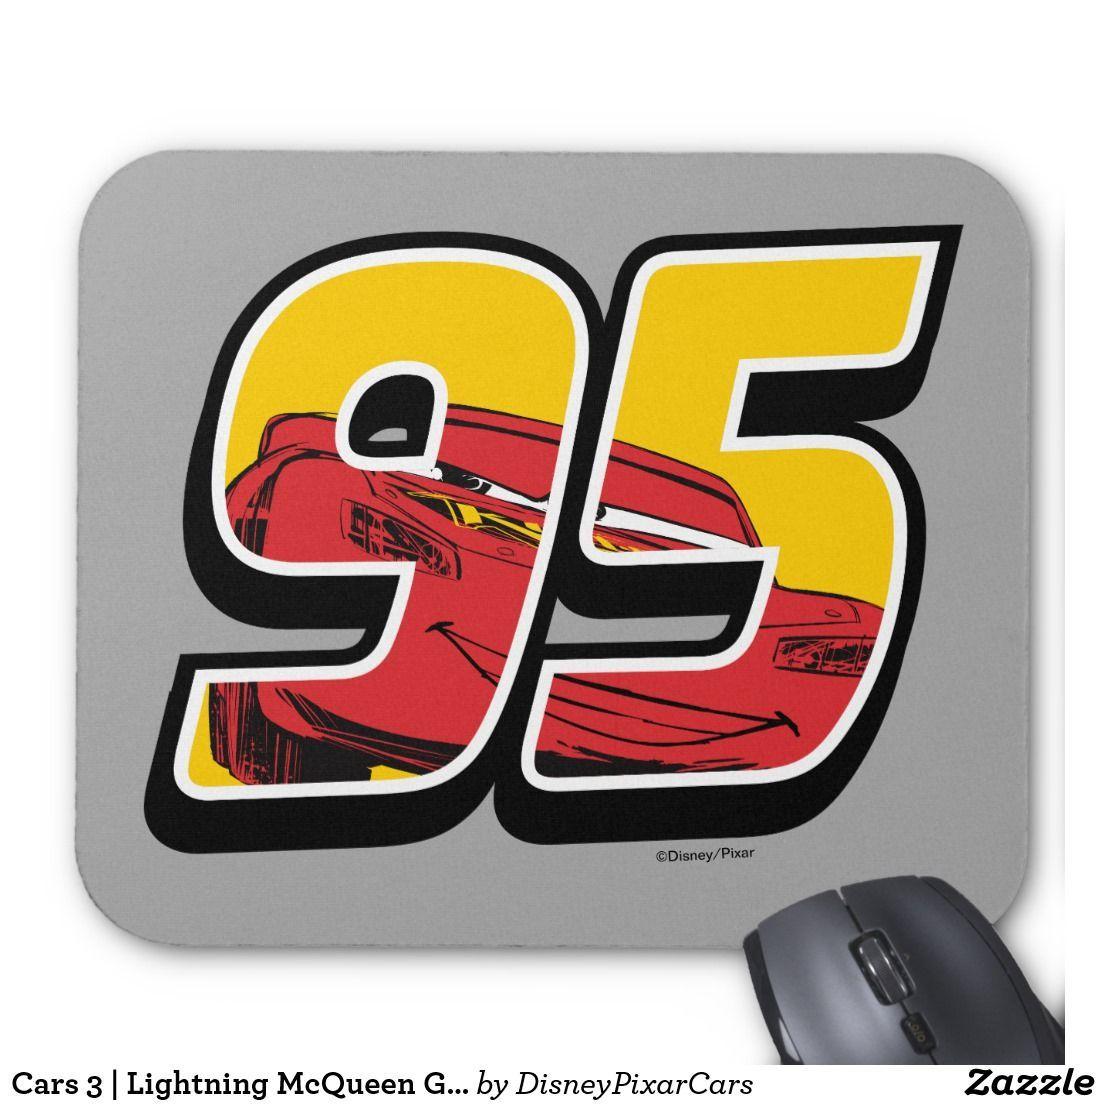 Cars Lightning McQueen 95 Logo - Mouse Pad 3. Lightning McQueen Go 95. .. .. Great Gift